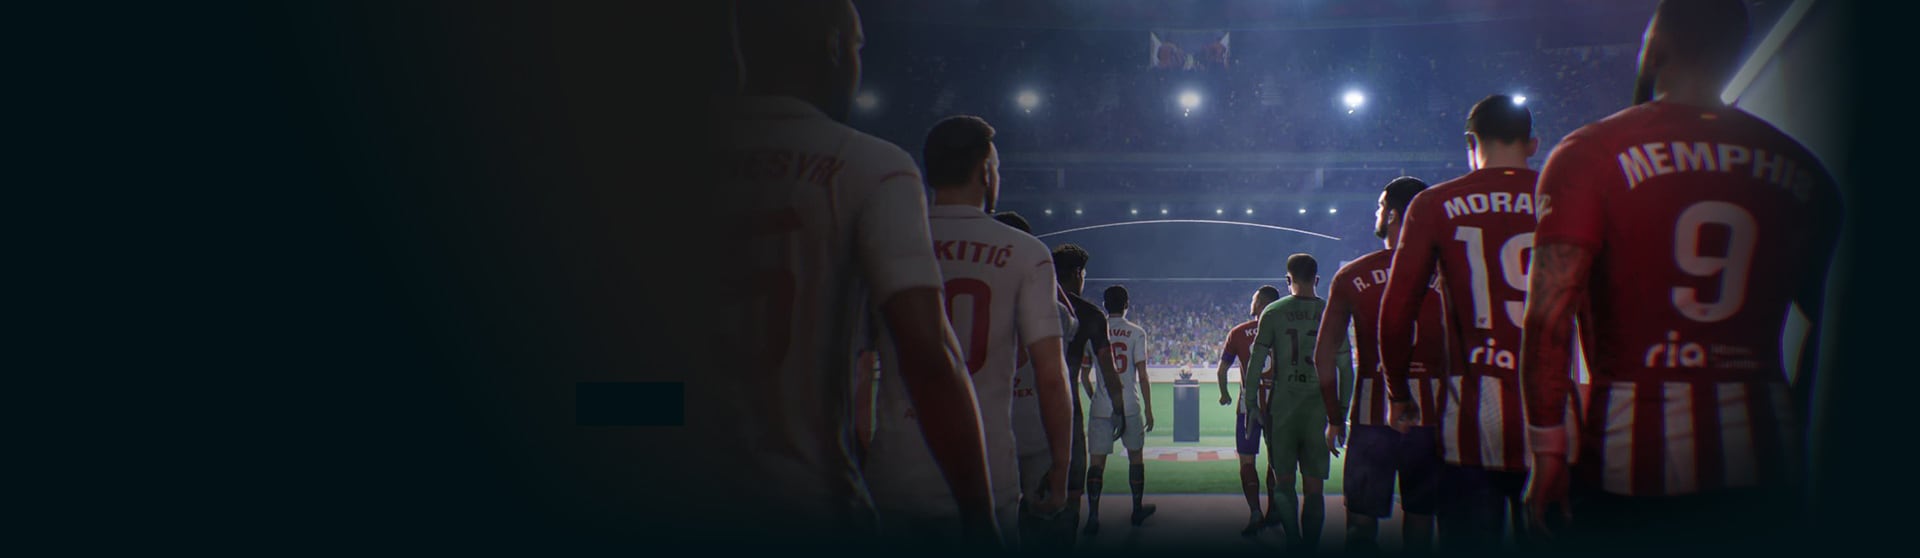 Buy EA Sports FC 24 / FIFA 24 FUT 12000 Points XBOX Live CD Key